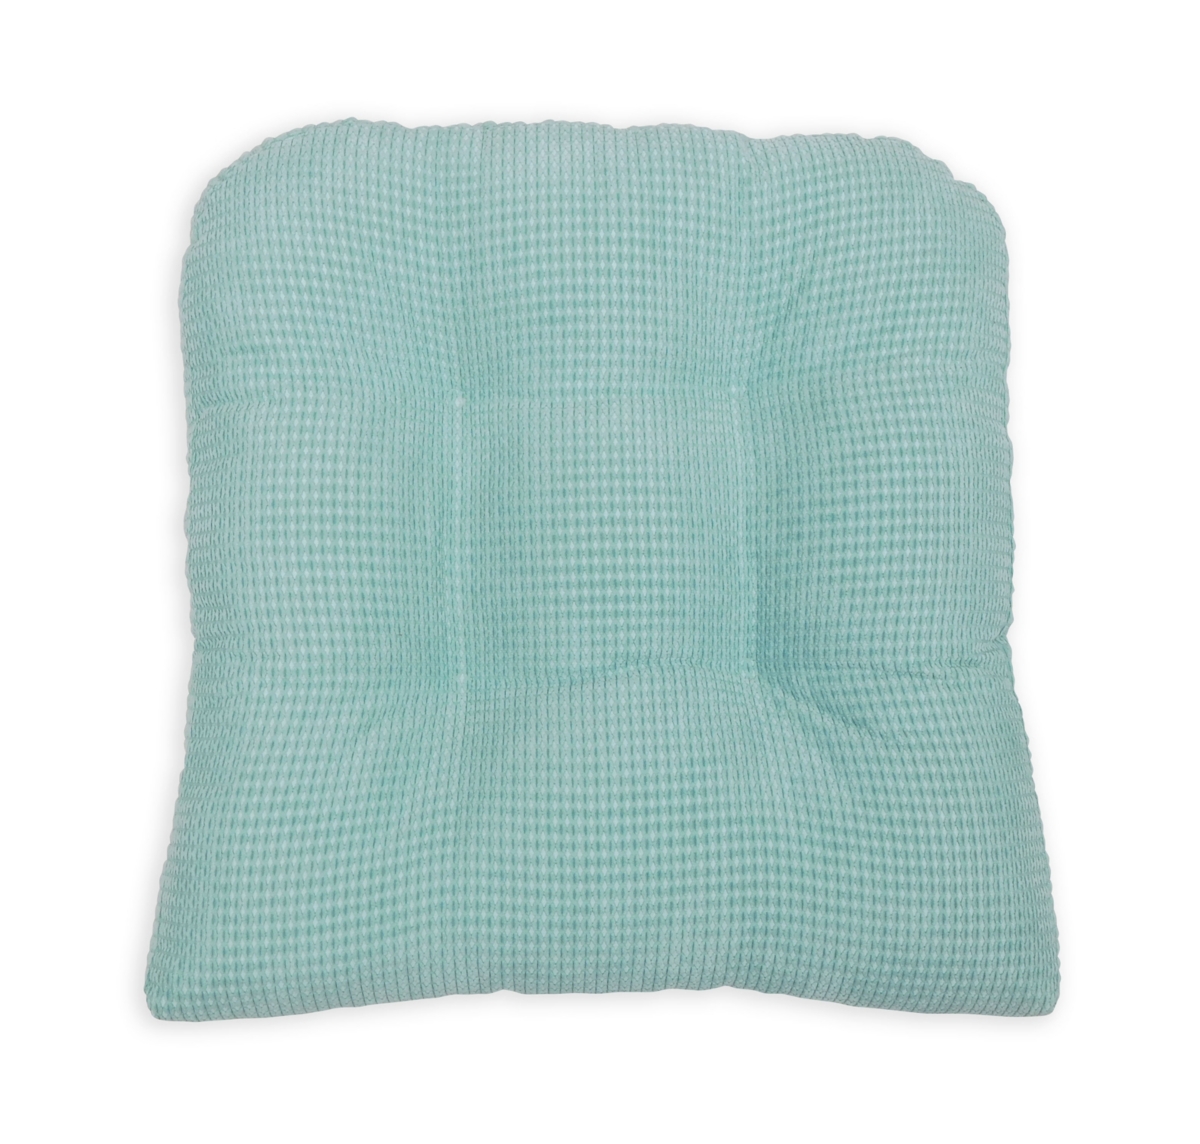 Arlee Memory Foam Non-Skid Seat Cushion Set of Two 2 Chair pad 16 Inch Burgun...